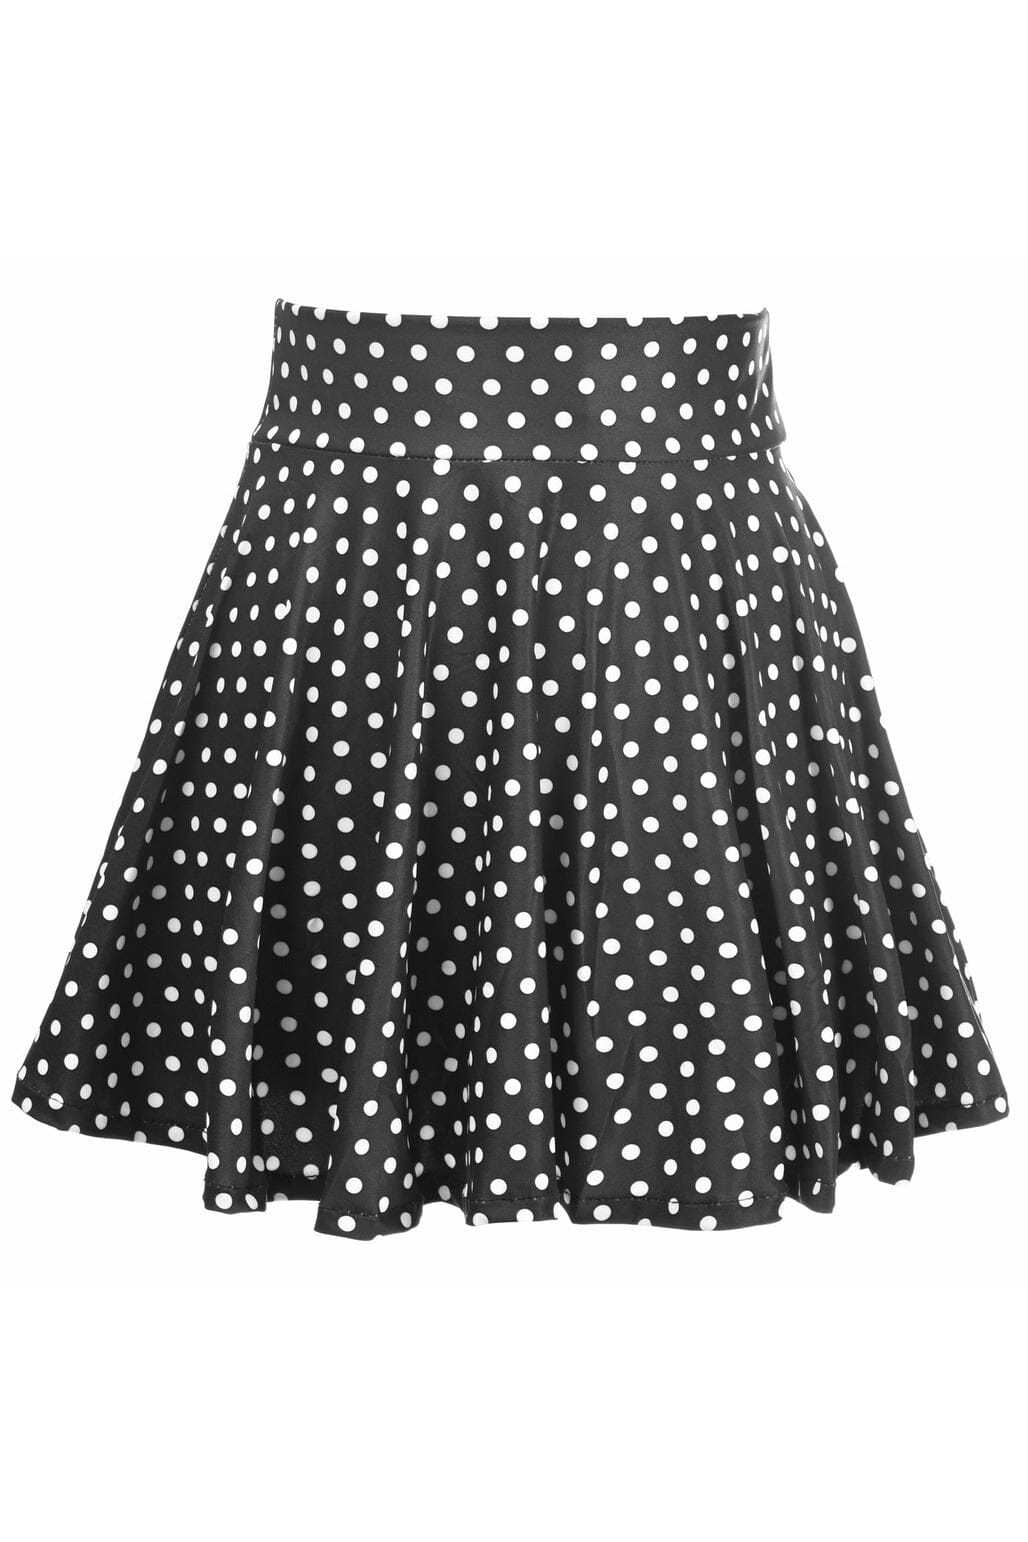 Polka Dot Stretch Lycra Skirt-Costume Skirts-Daisy Corsets-Black-XS-SEXYSHOES.COM